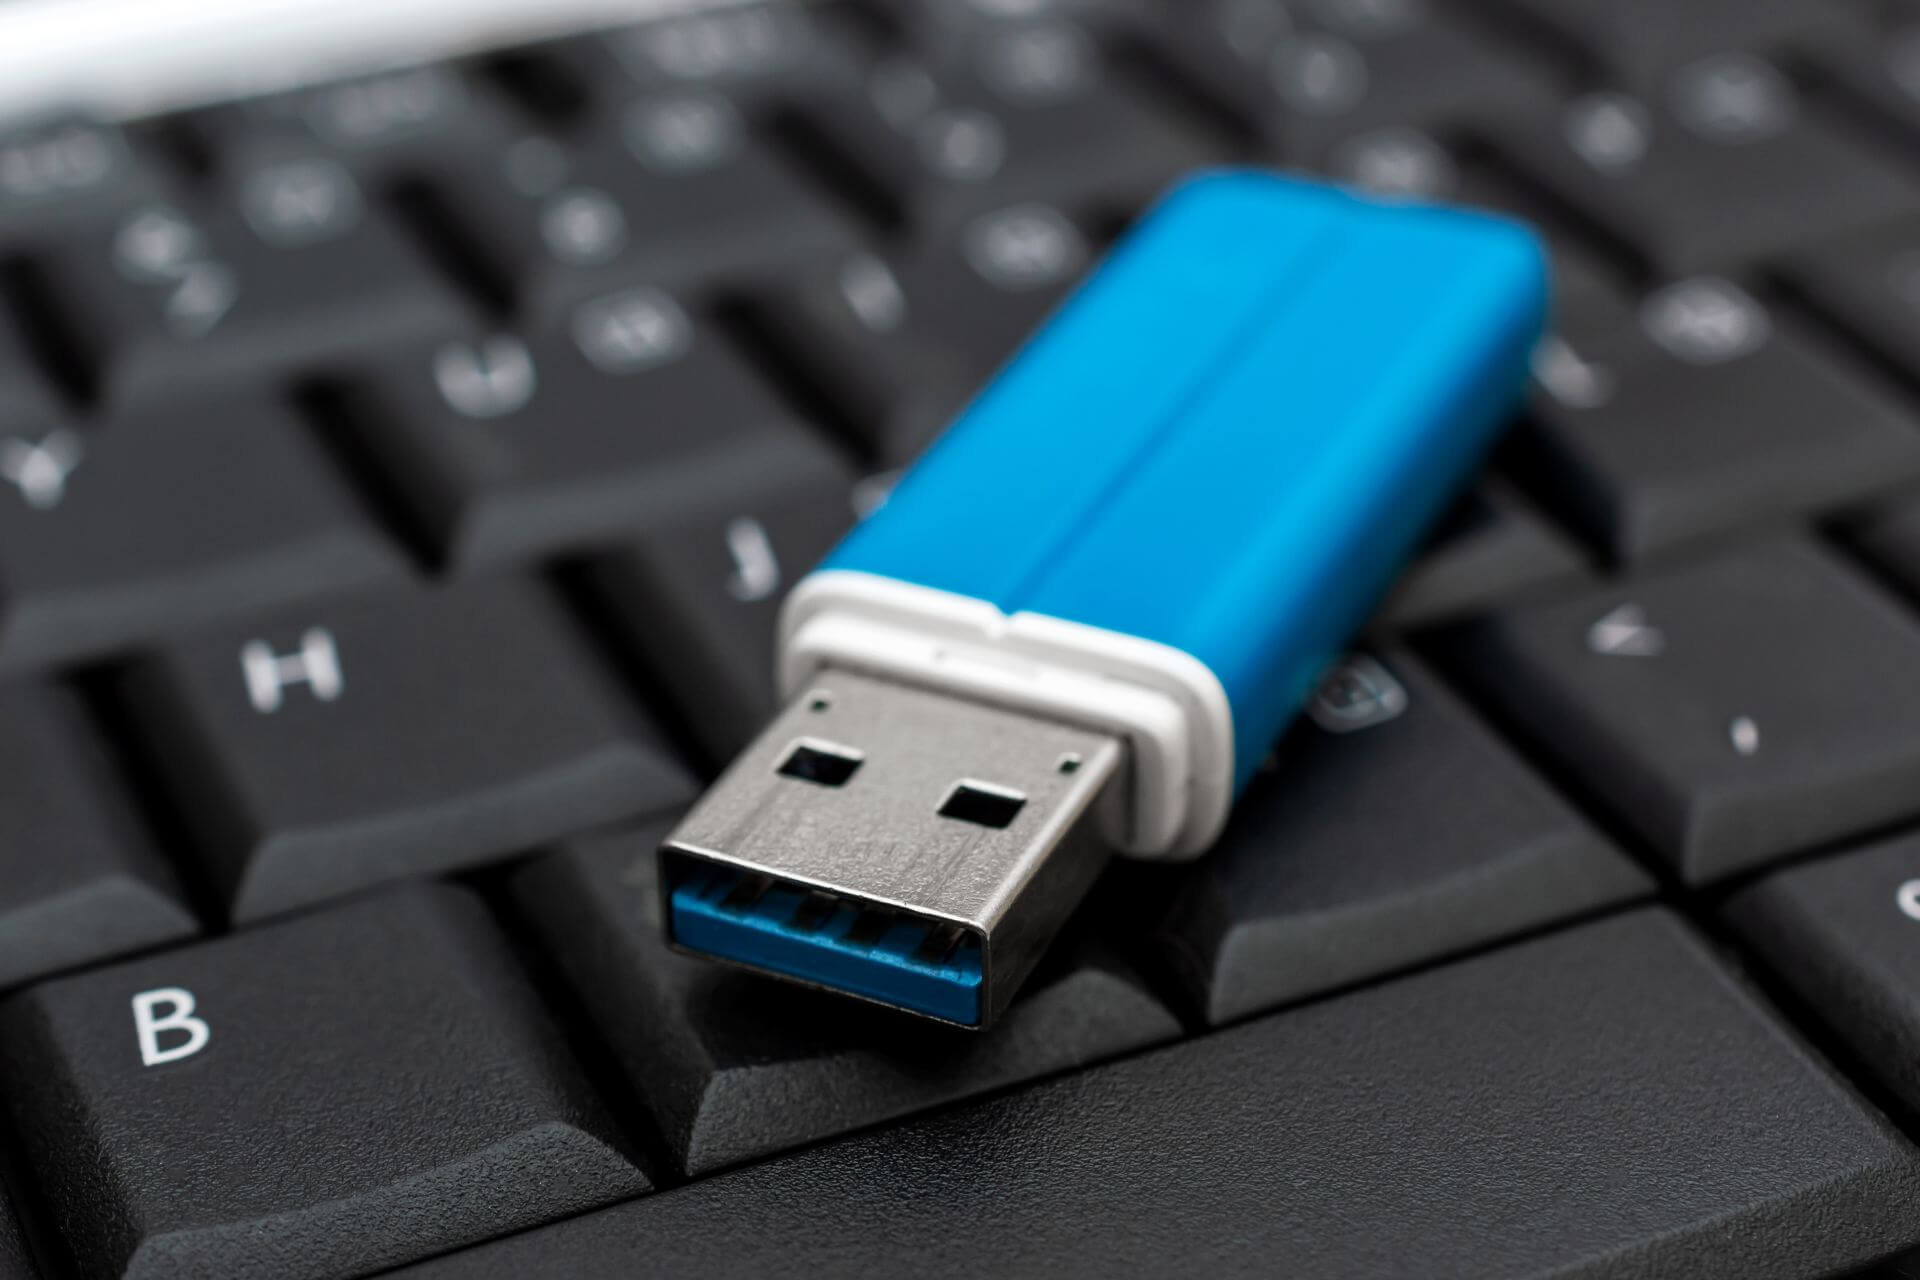 USB drive detected won't show data